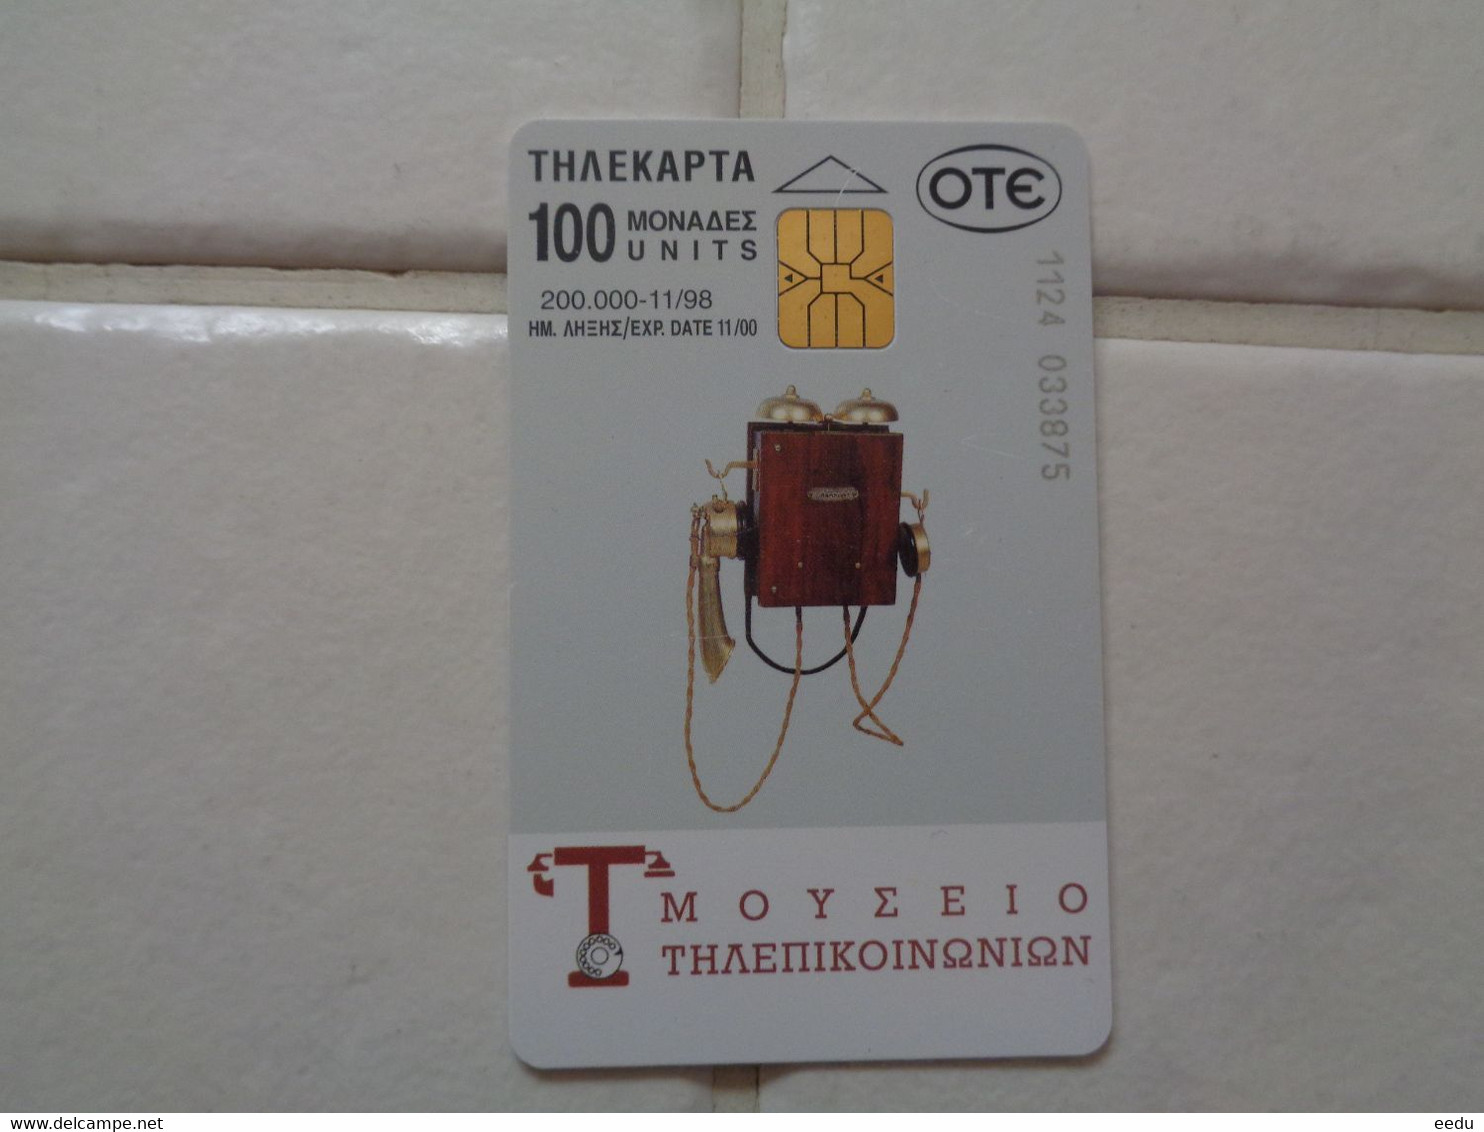 Greece Phonecard - Telefoni